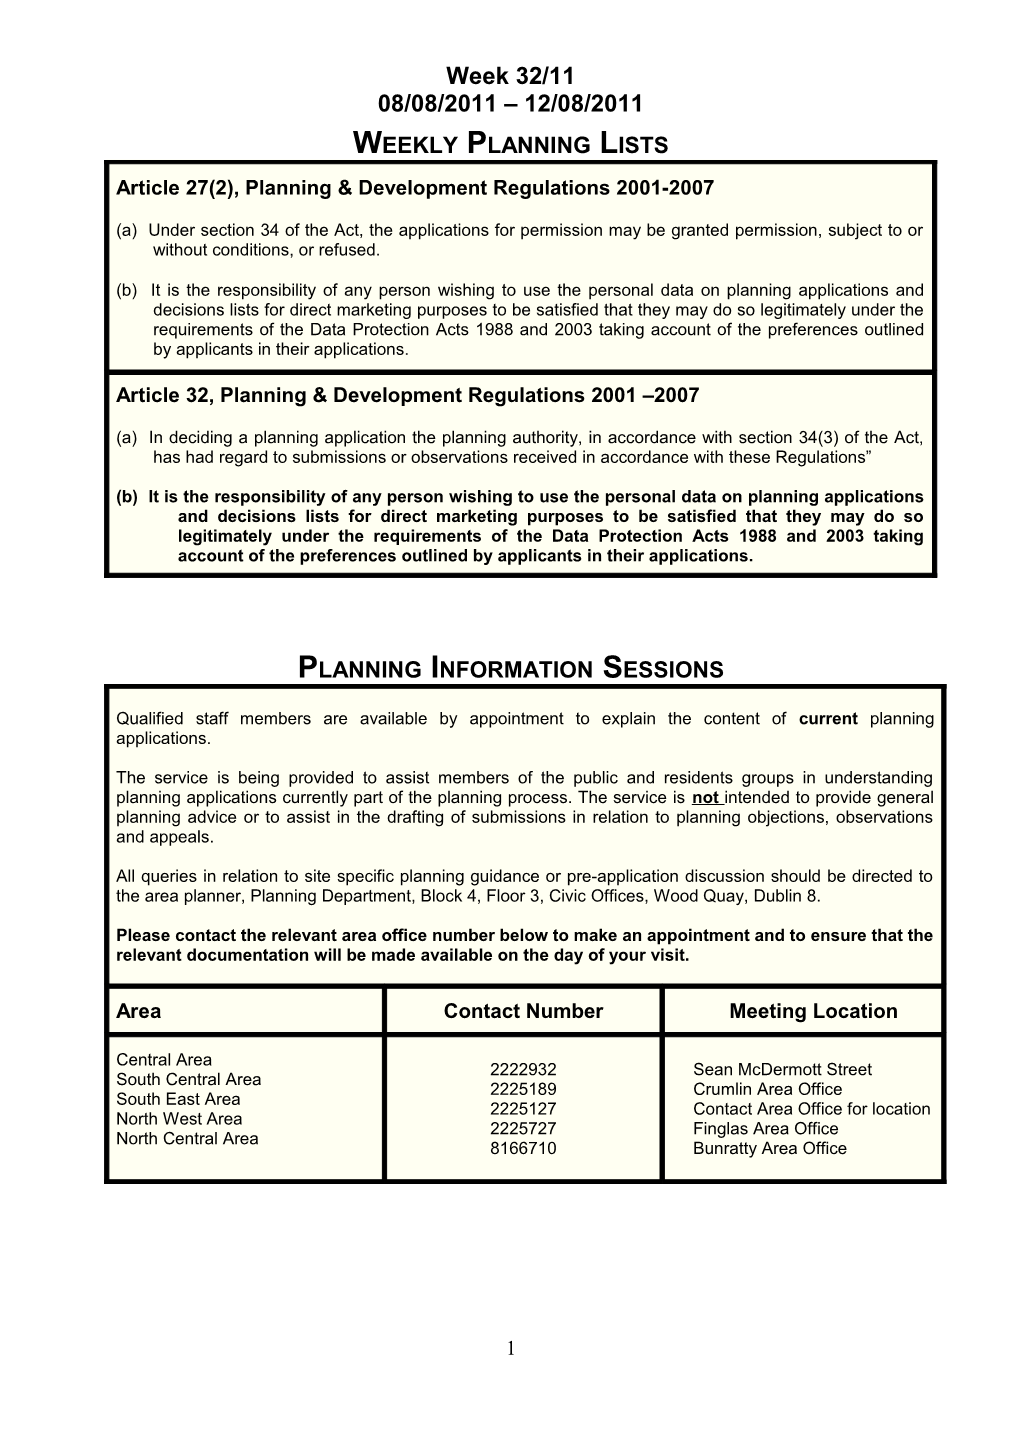 Article 27(2), Planning & Development Regulations 2001-2007 s2